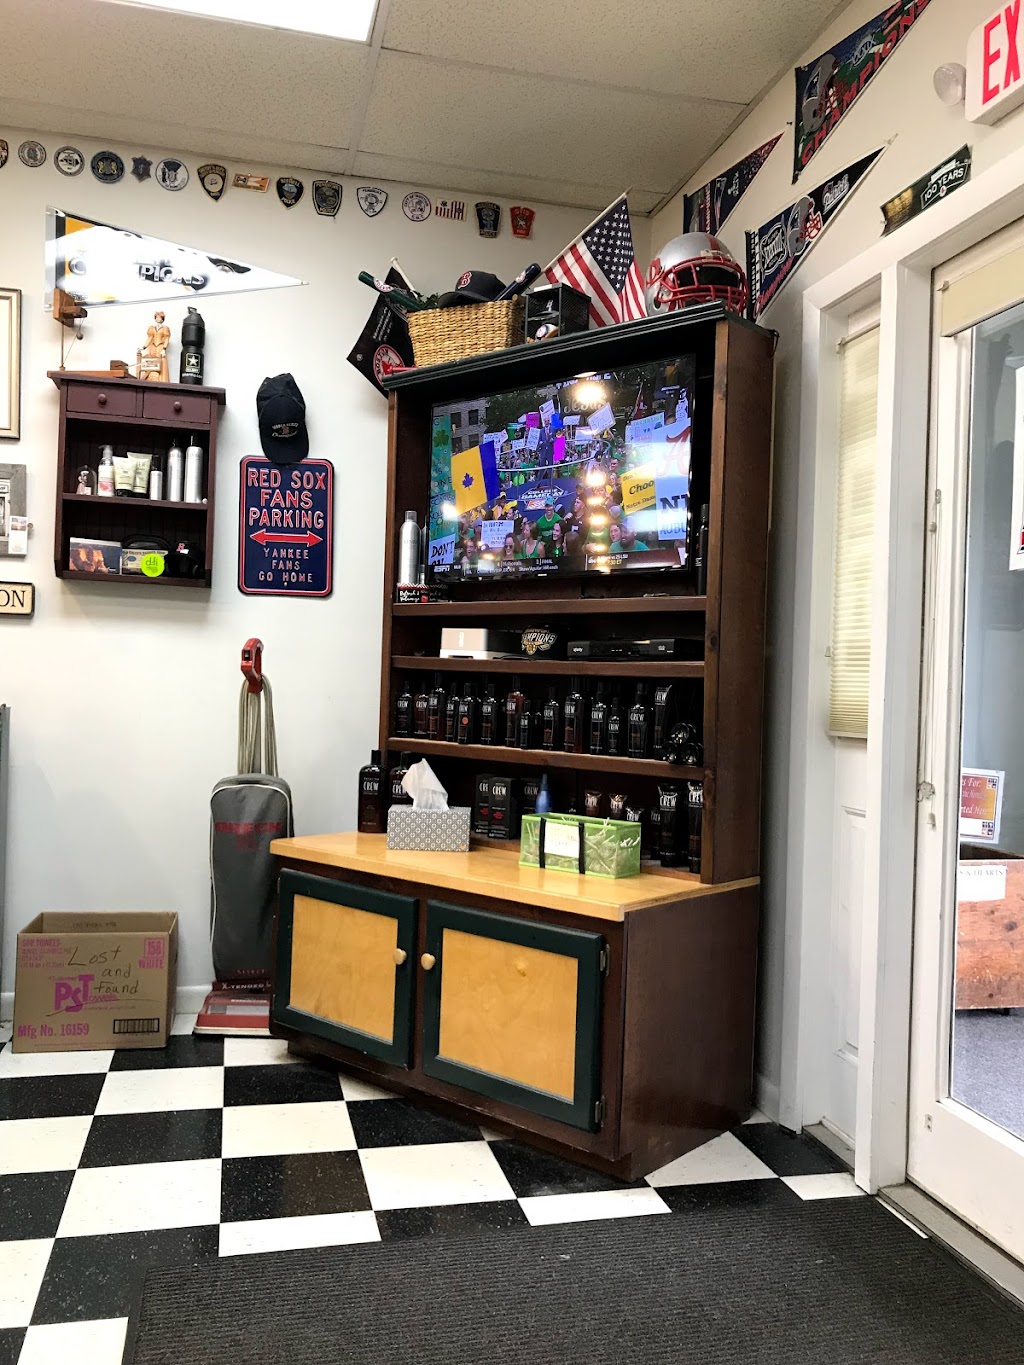 Brians Barber Shop | 179 Summer St, Kingston, MA 02364, USA | Phone: (781) 585-2727